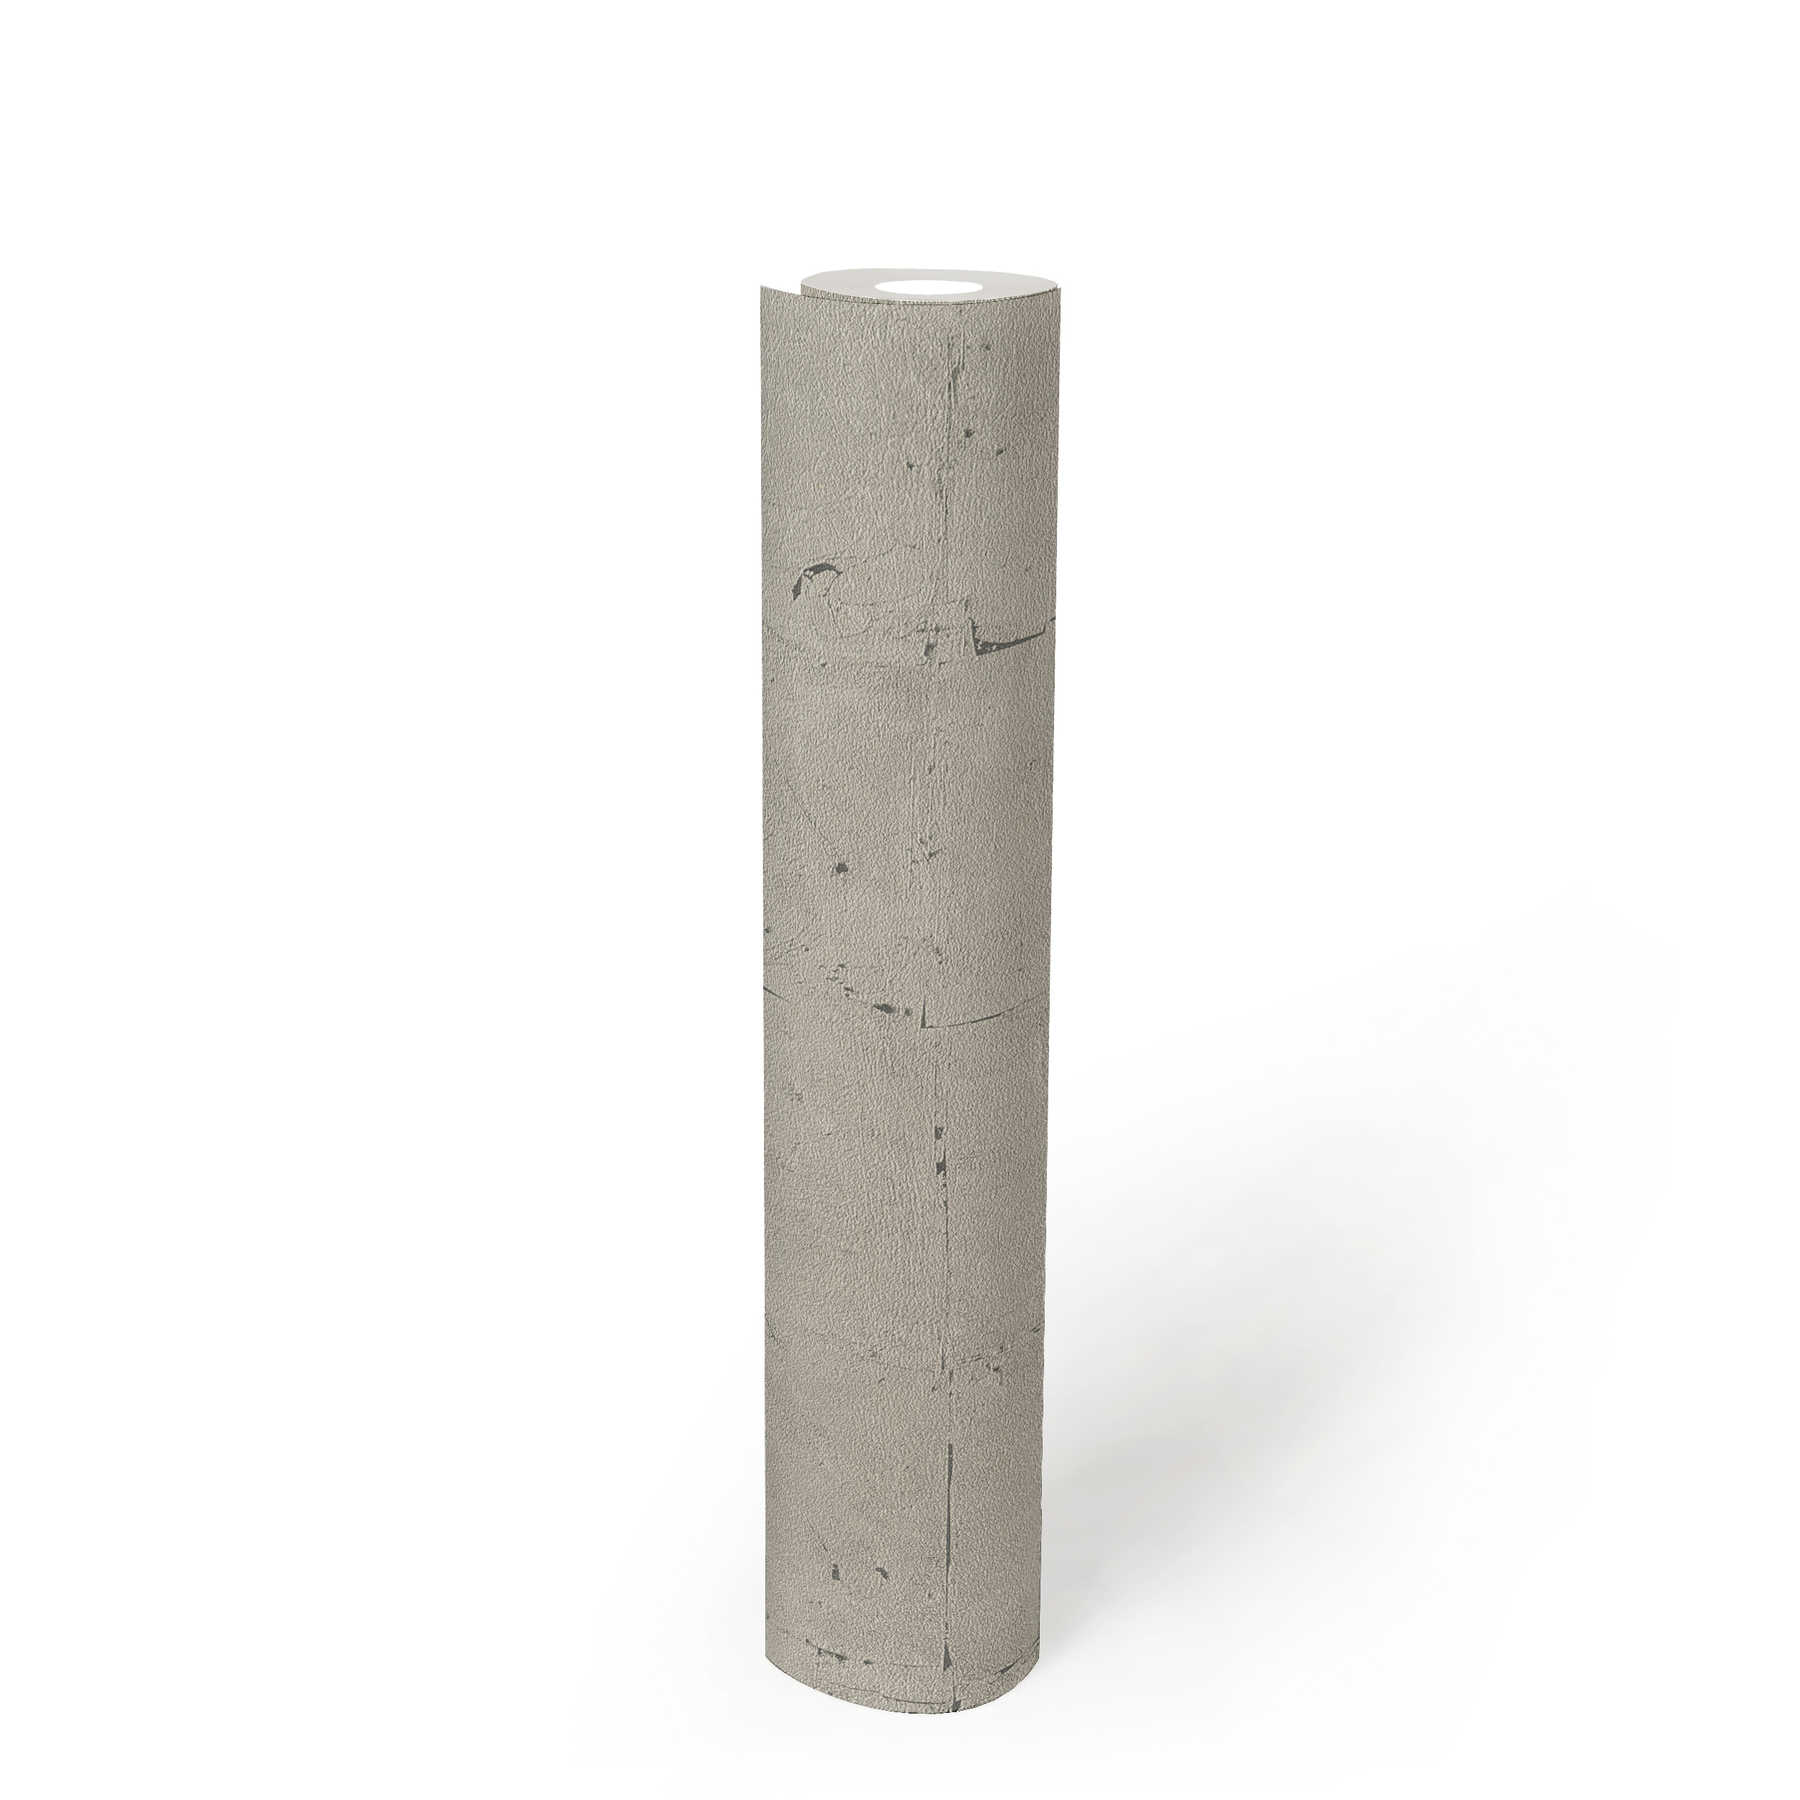             Tapete in Steinoptik mit Strukturmuster – Grau, Beige
        